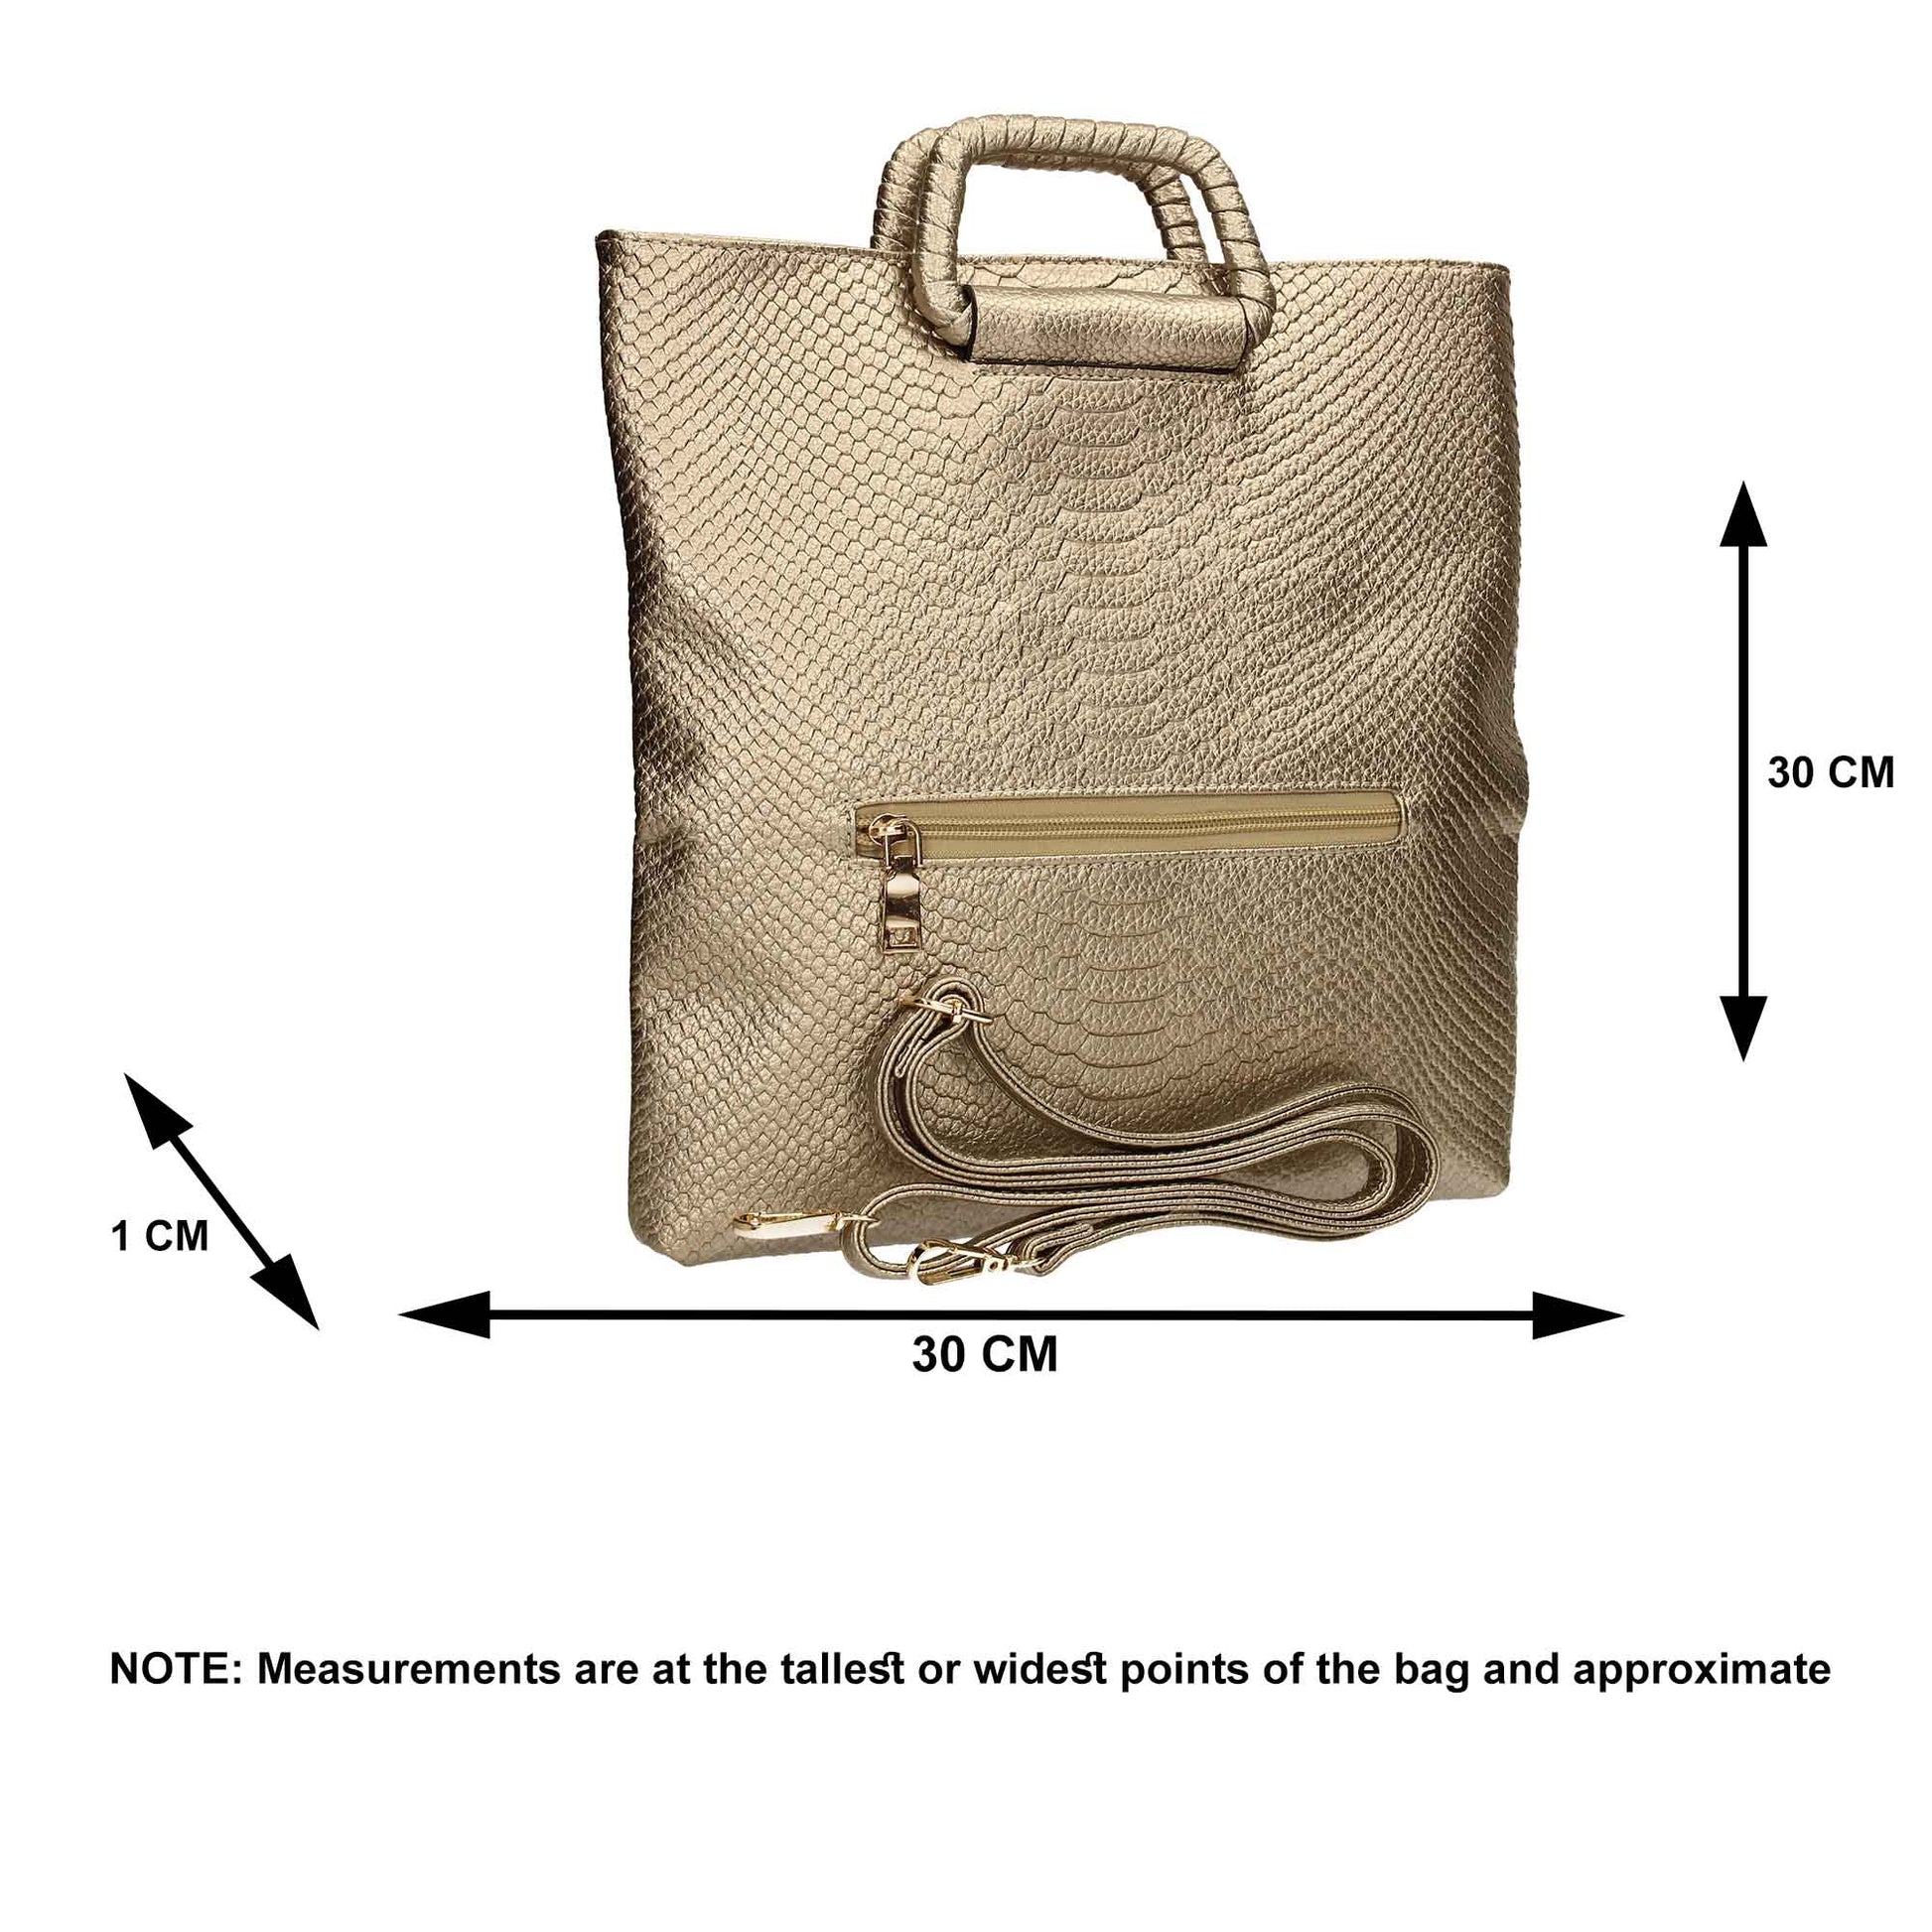 SWANKYSWANS Kara Fold Over Clutch Bag Silver Cute Cheap Clutch Bag For Weddings School and Work